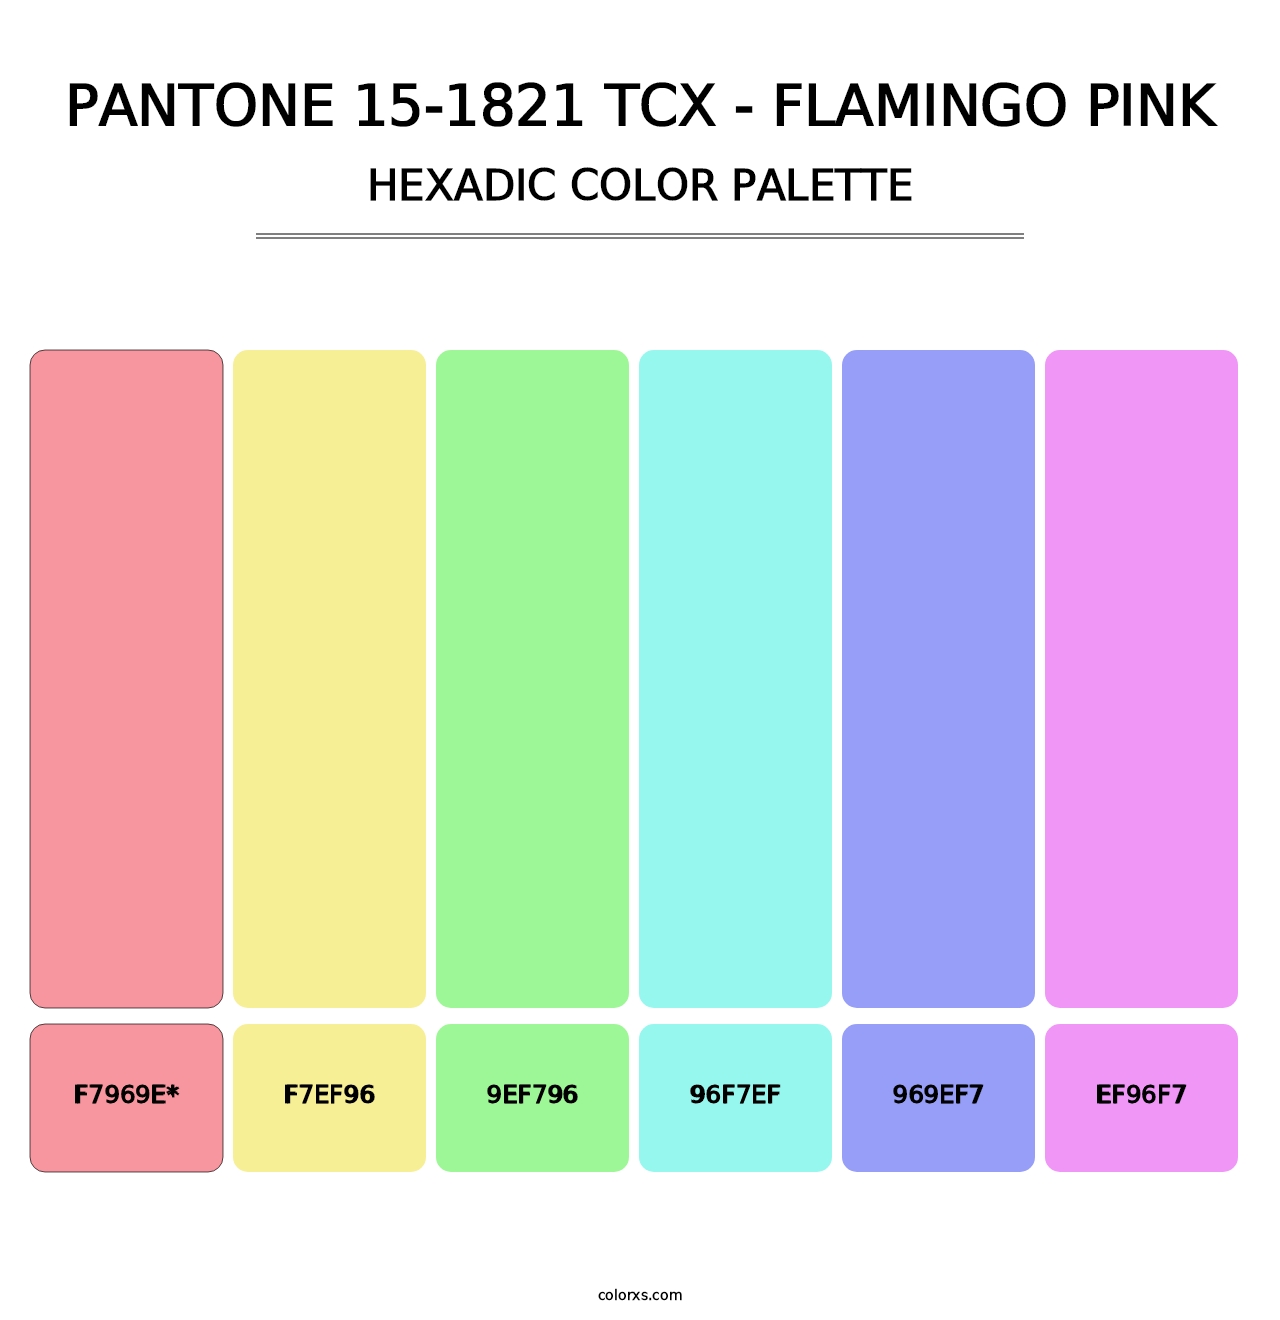 PANTONE 15-1821 TCX - Flamingo Pink - Hexadic Color Palette